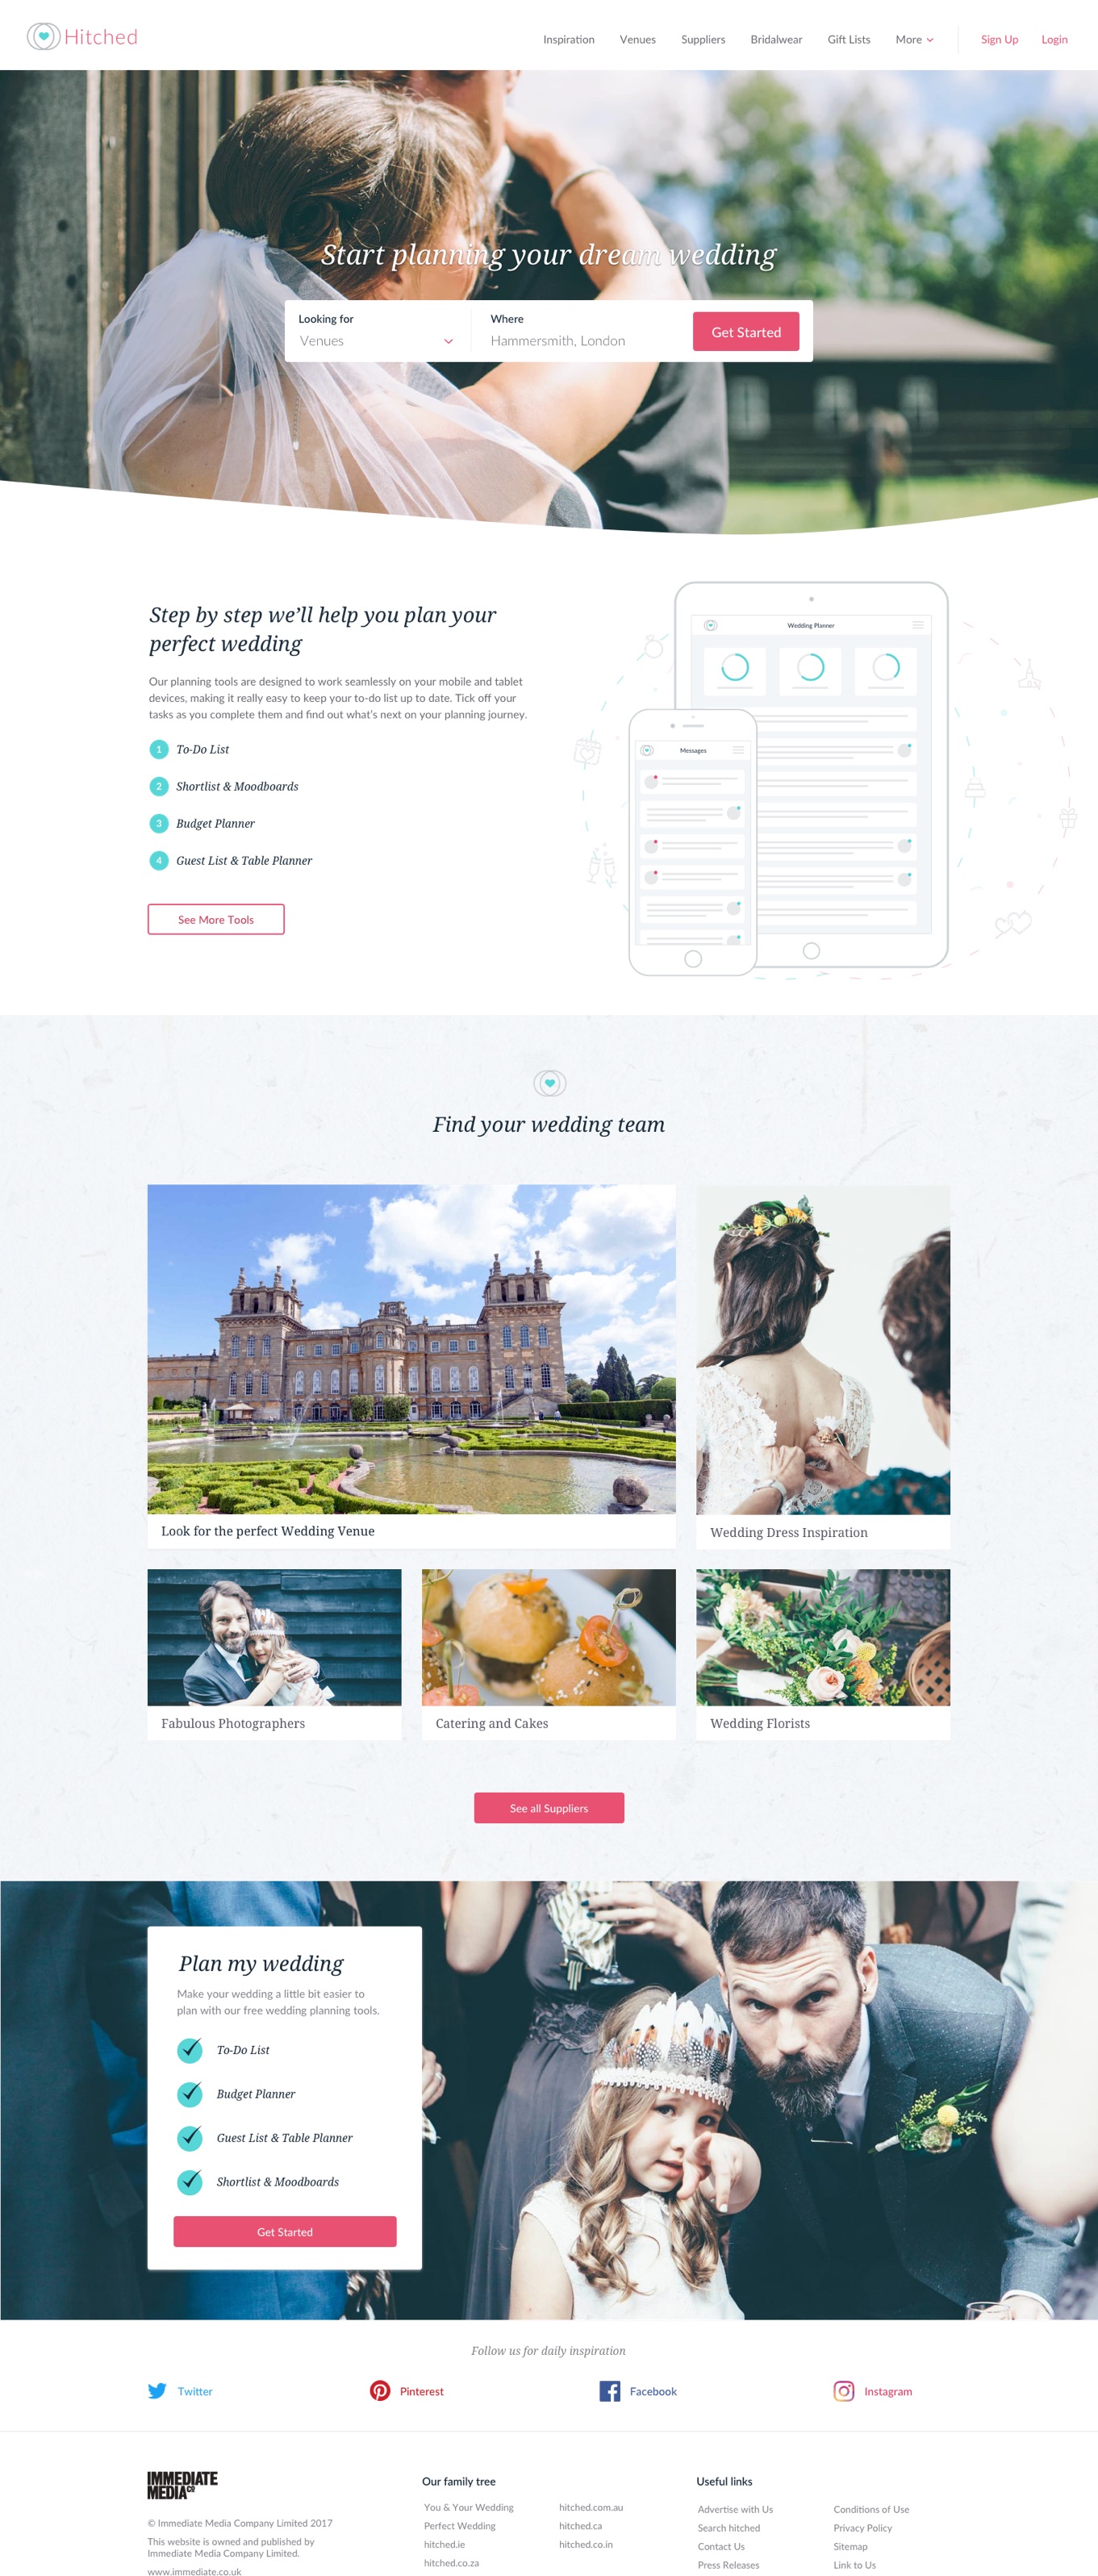 Homepage visual for wedding website